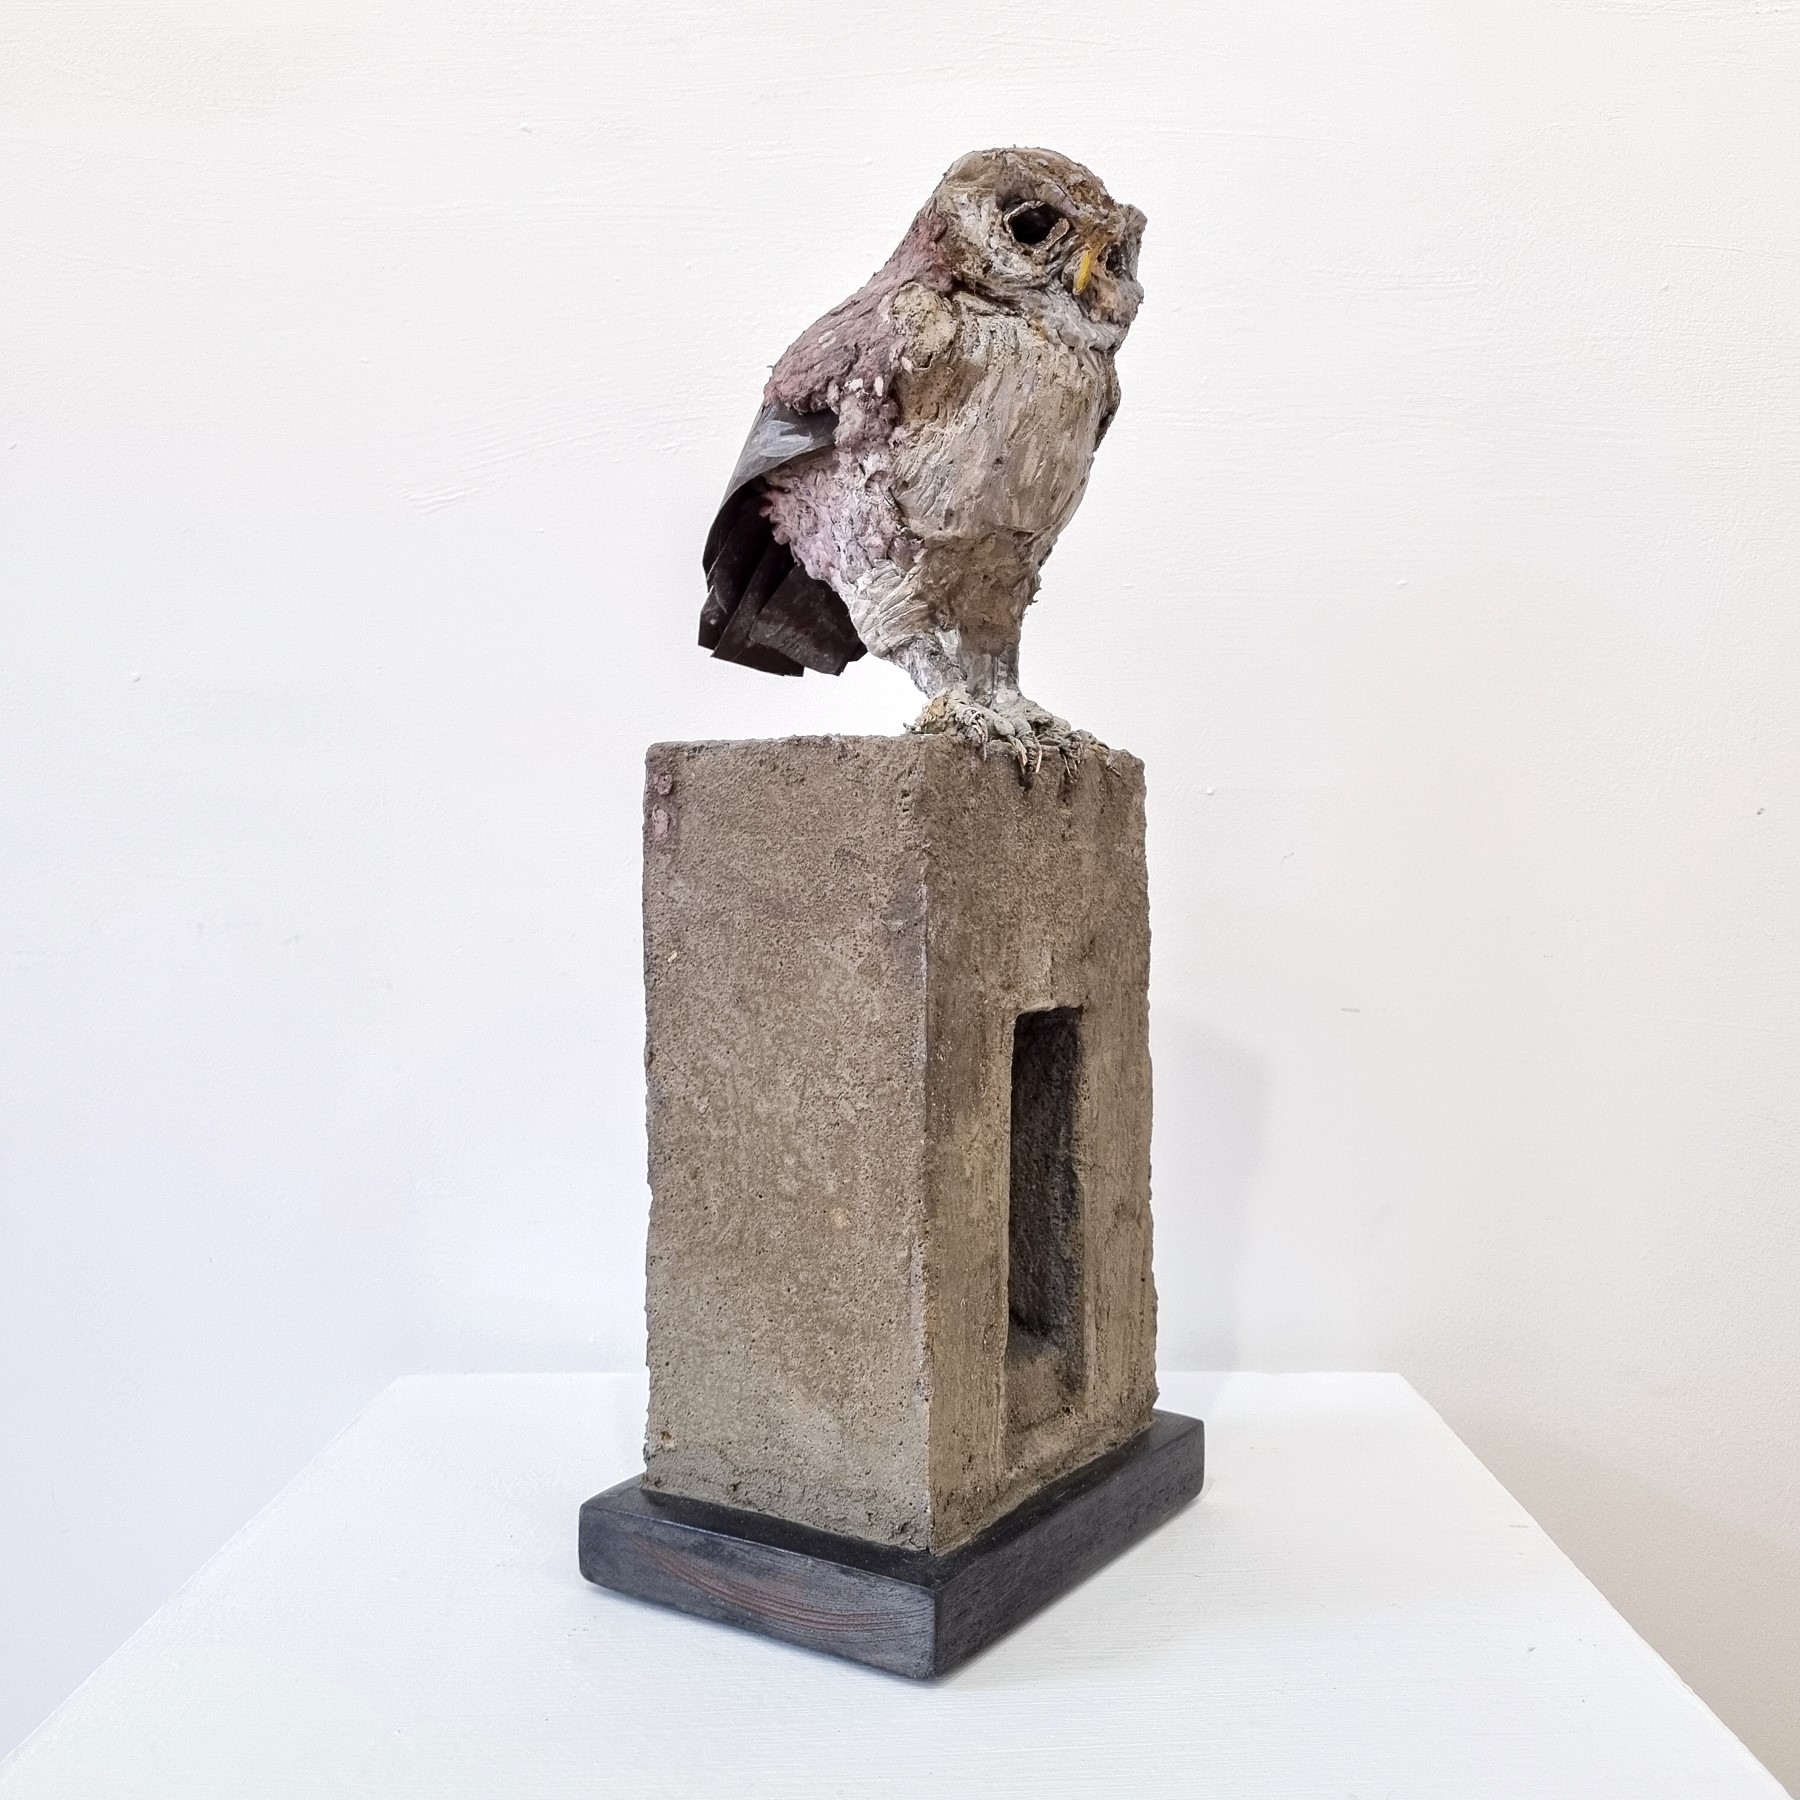 'Guardian Owl' by artist Mark Gibbs